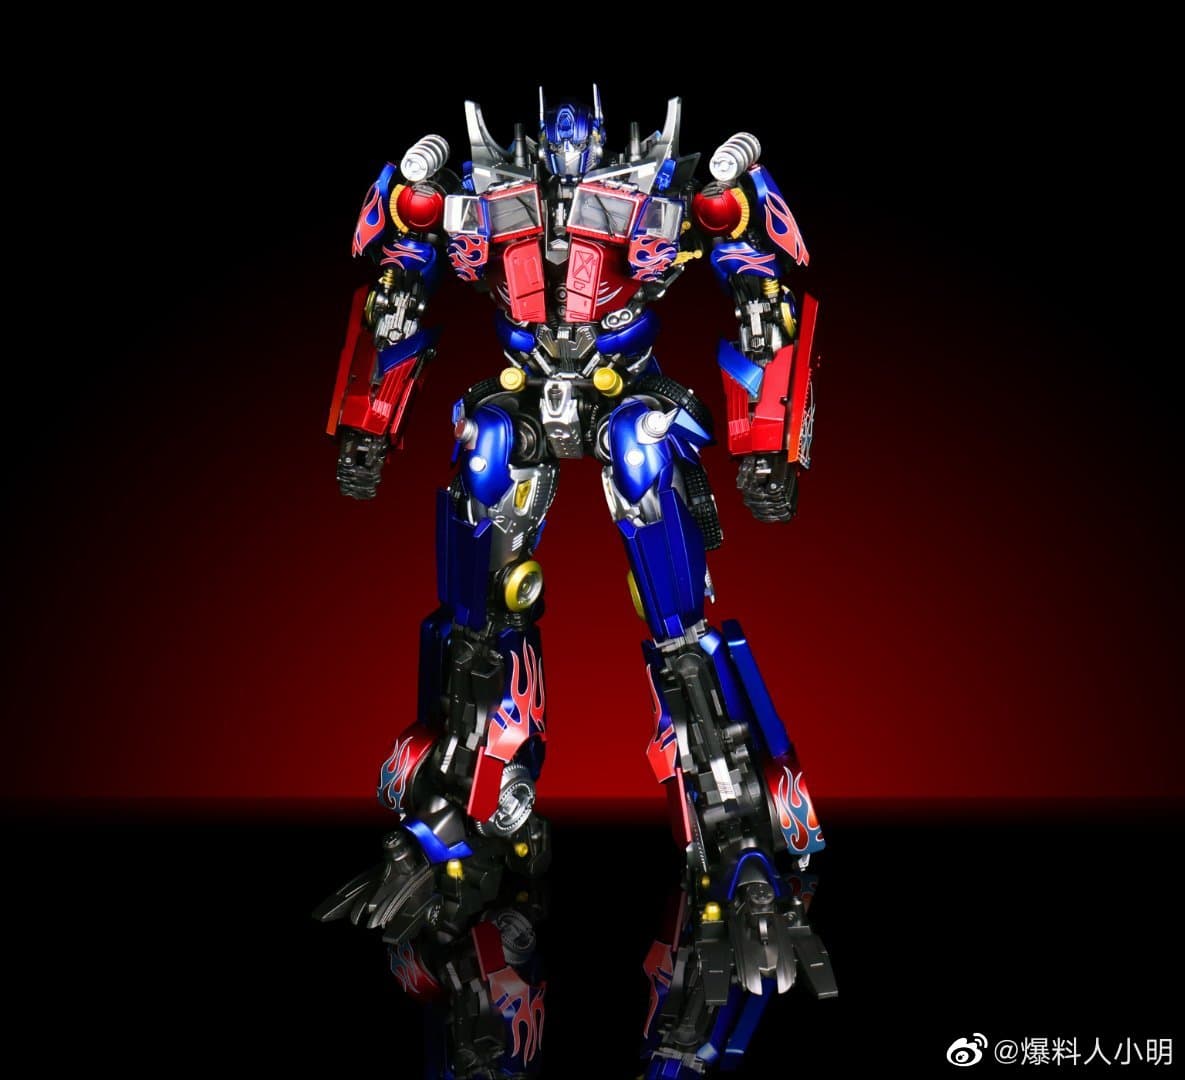 4th-party-transformers-revenge-of-the-fallen-dlx-optimus-prime